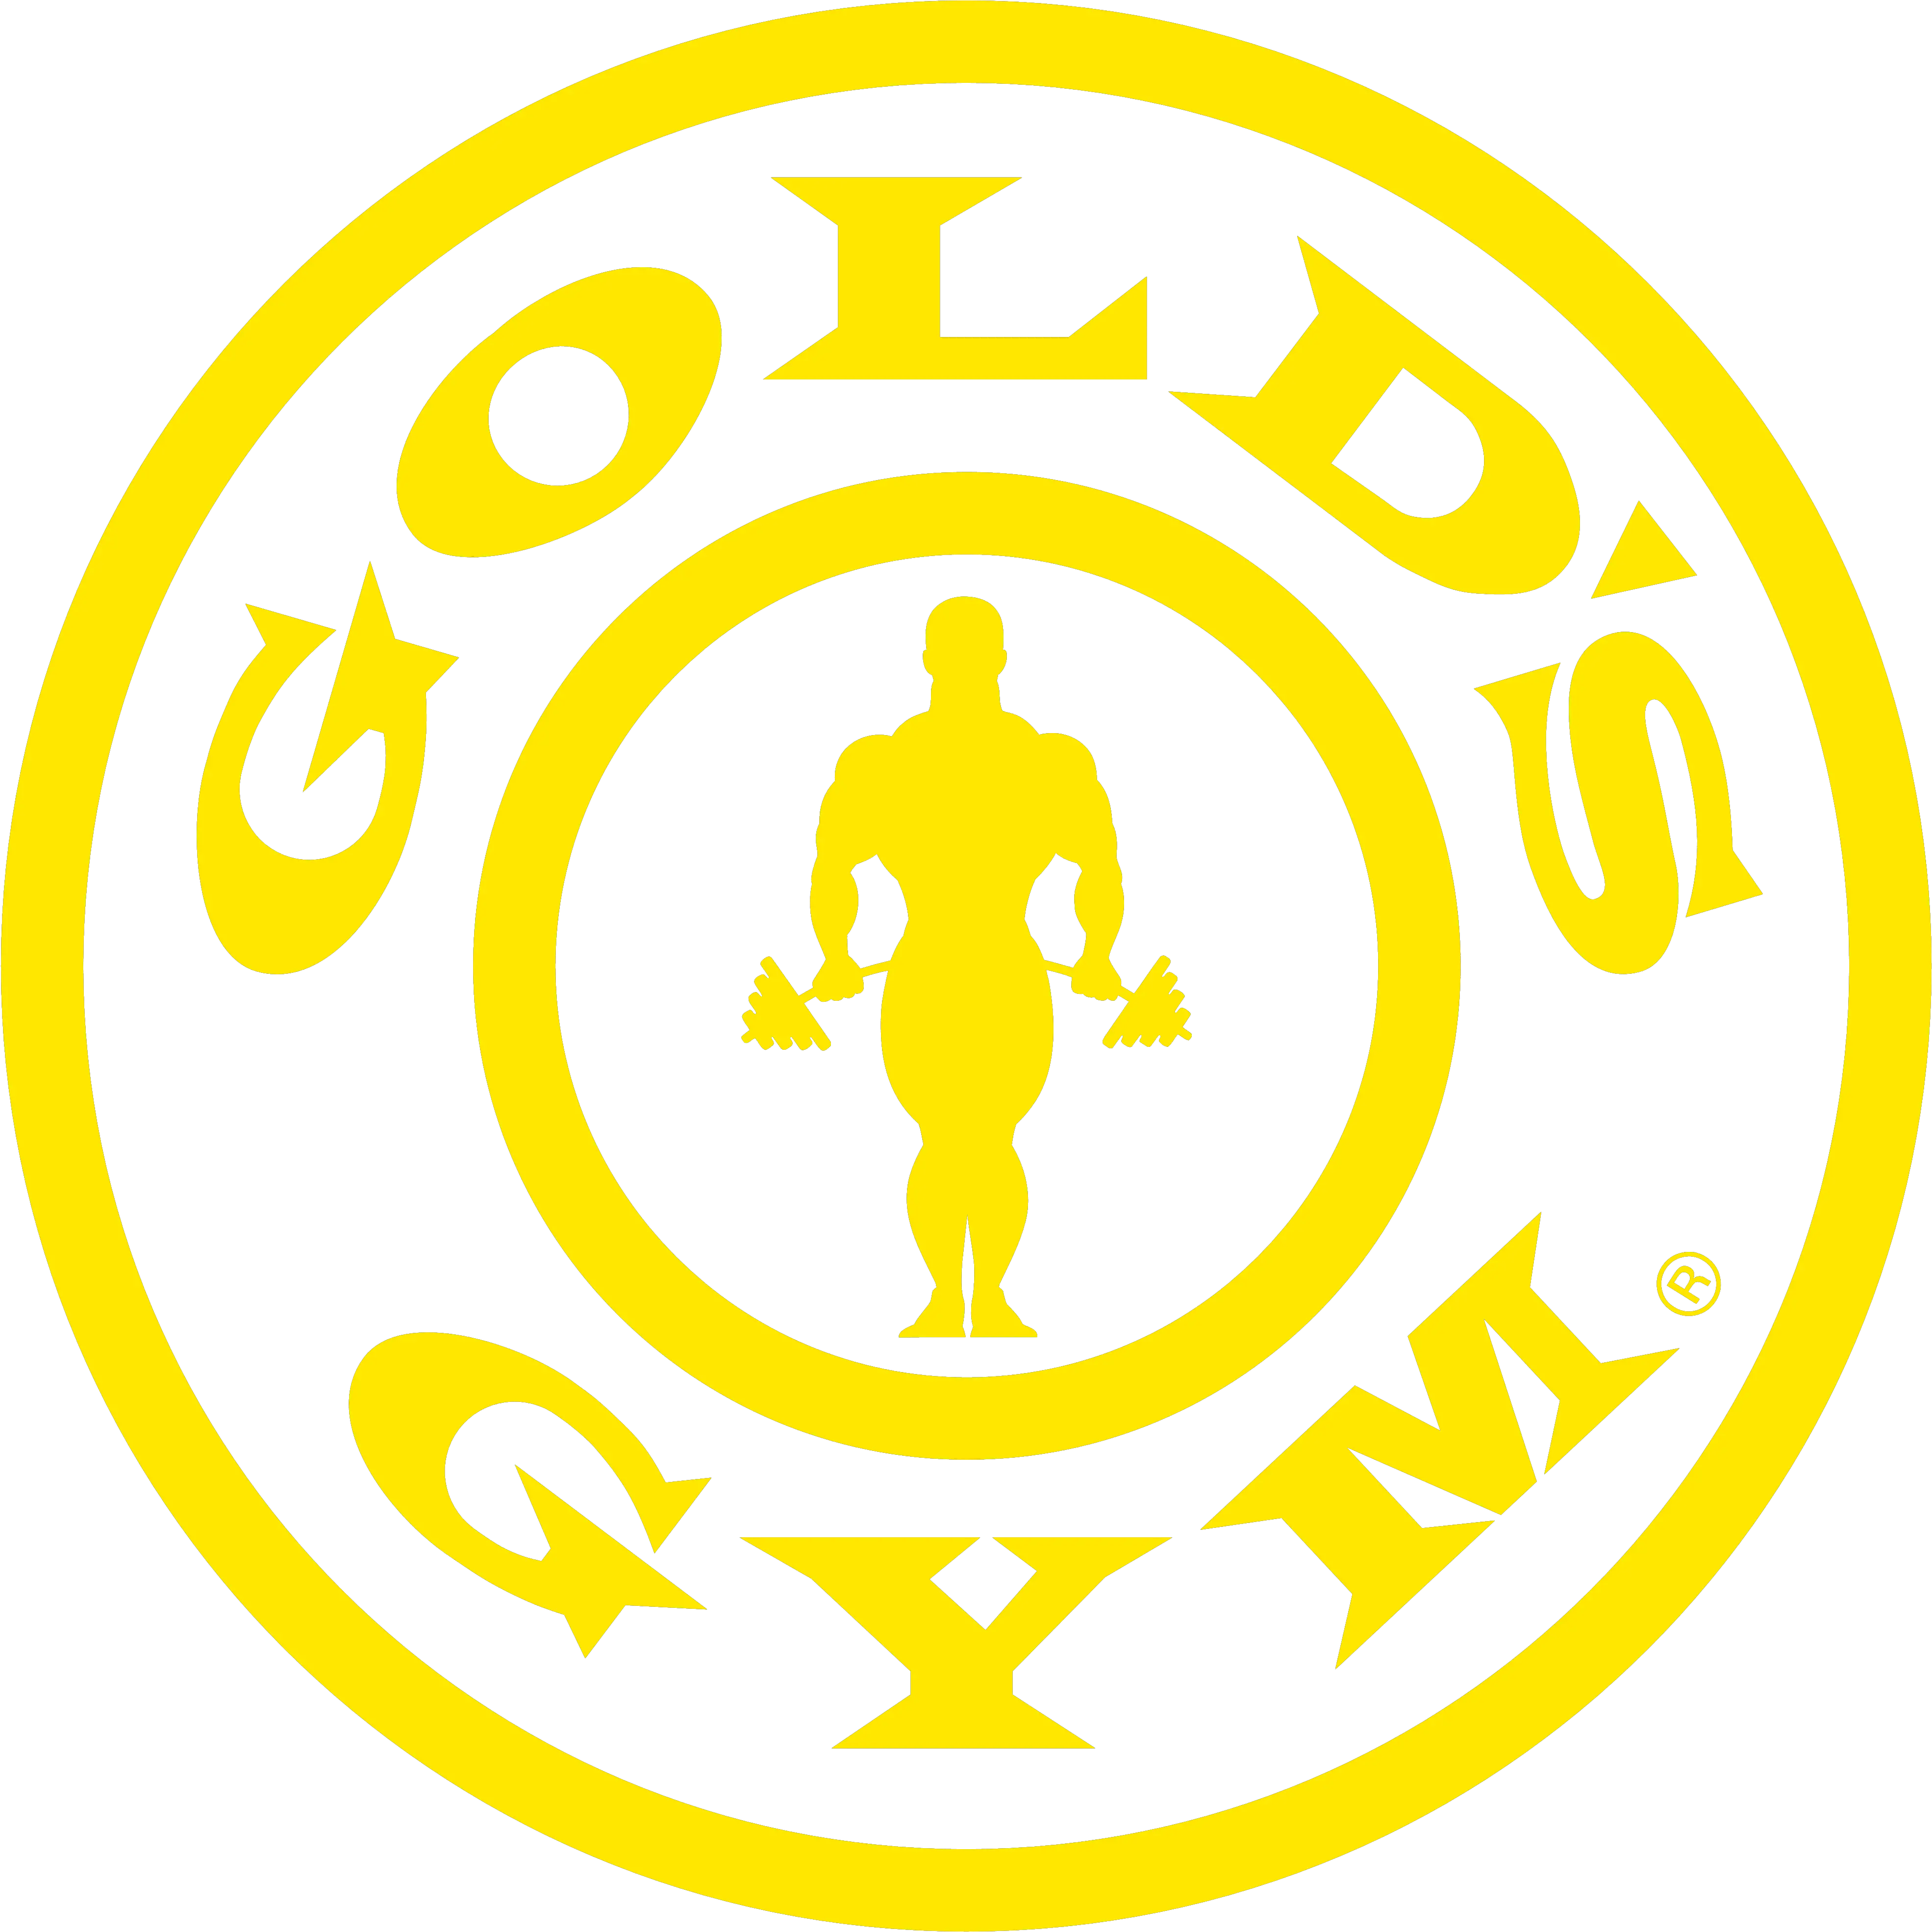 Golds Gym Gold Gym Png Gym Logos